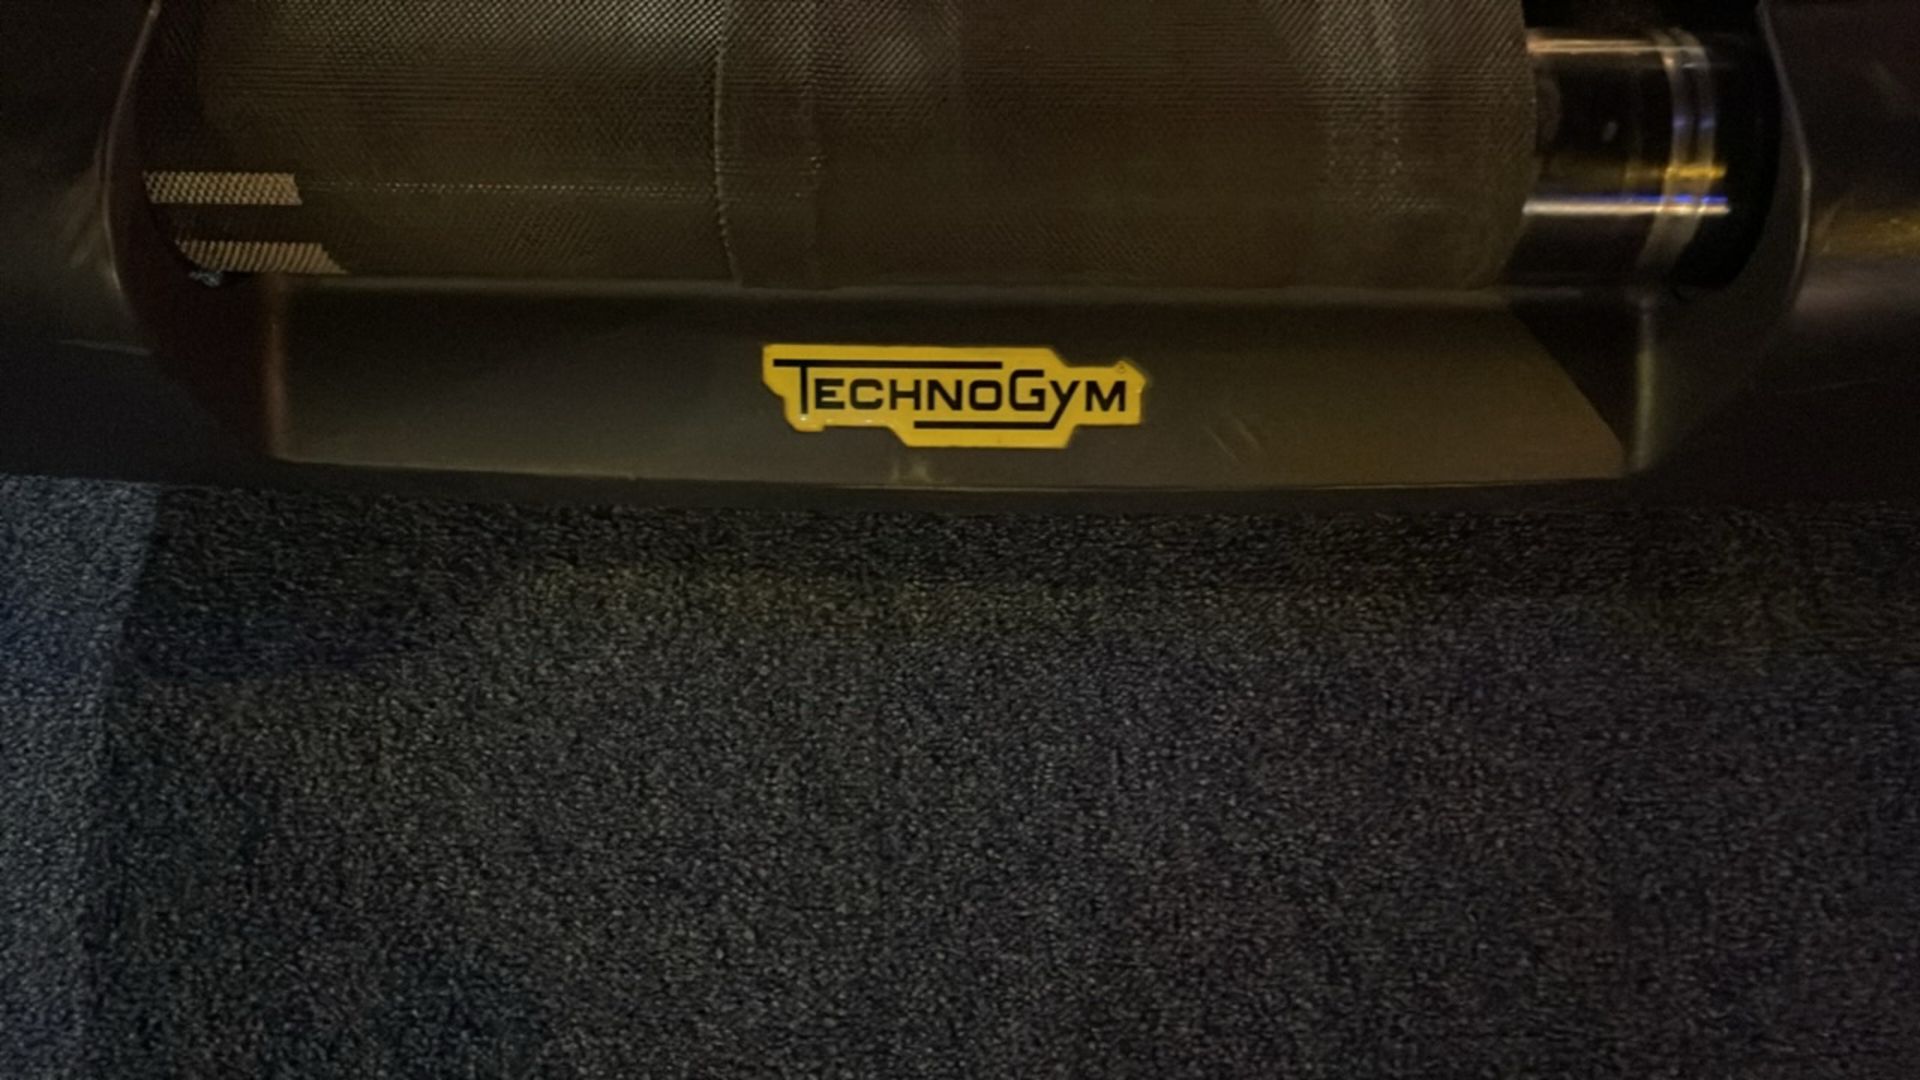 Technogym Treadmill 1000 - Image 3 of 7